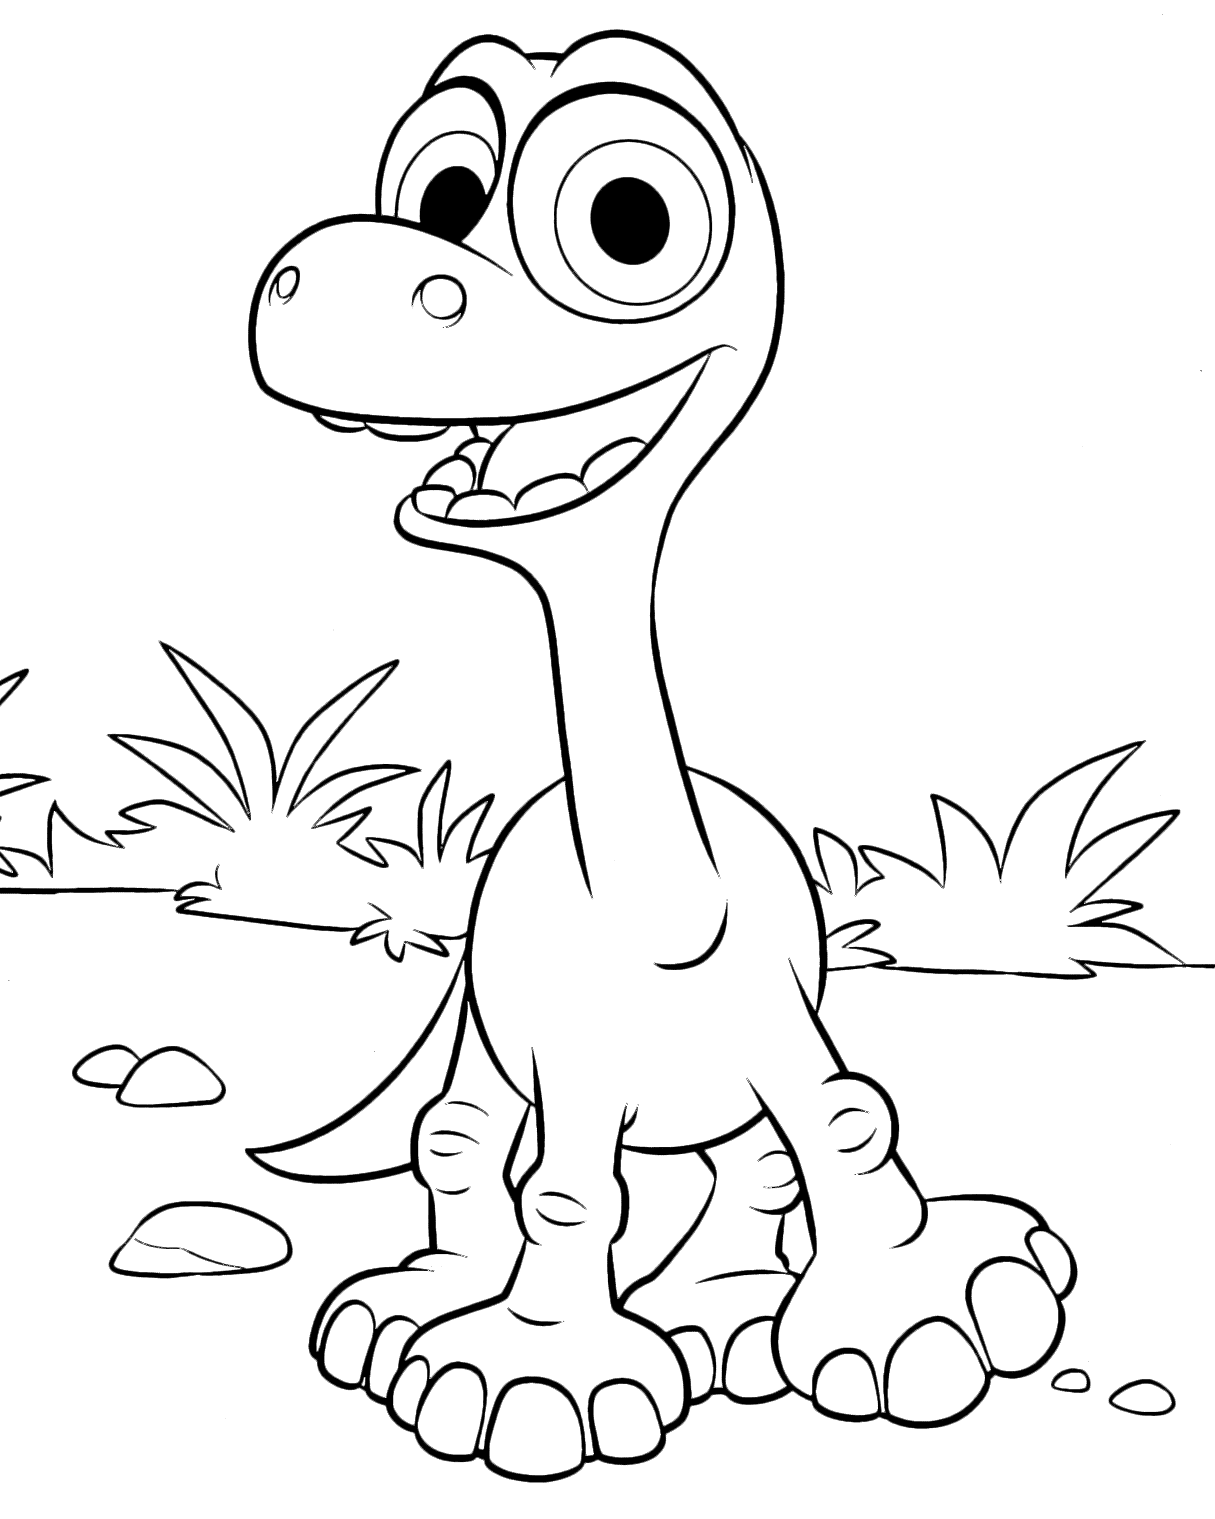 The Good Dinosaur – Arlo Coloring Page